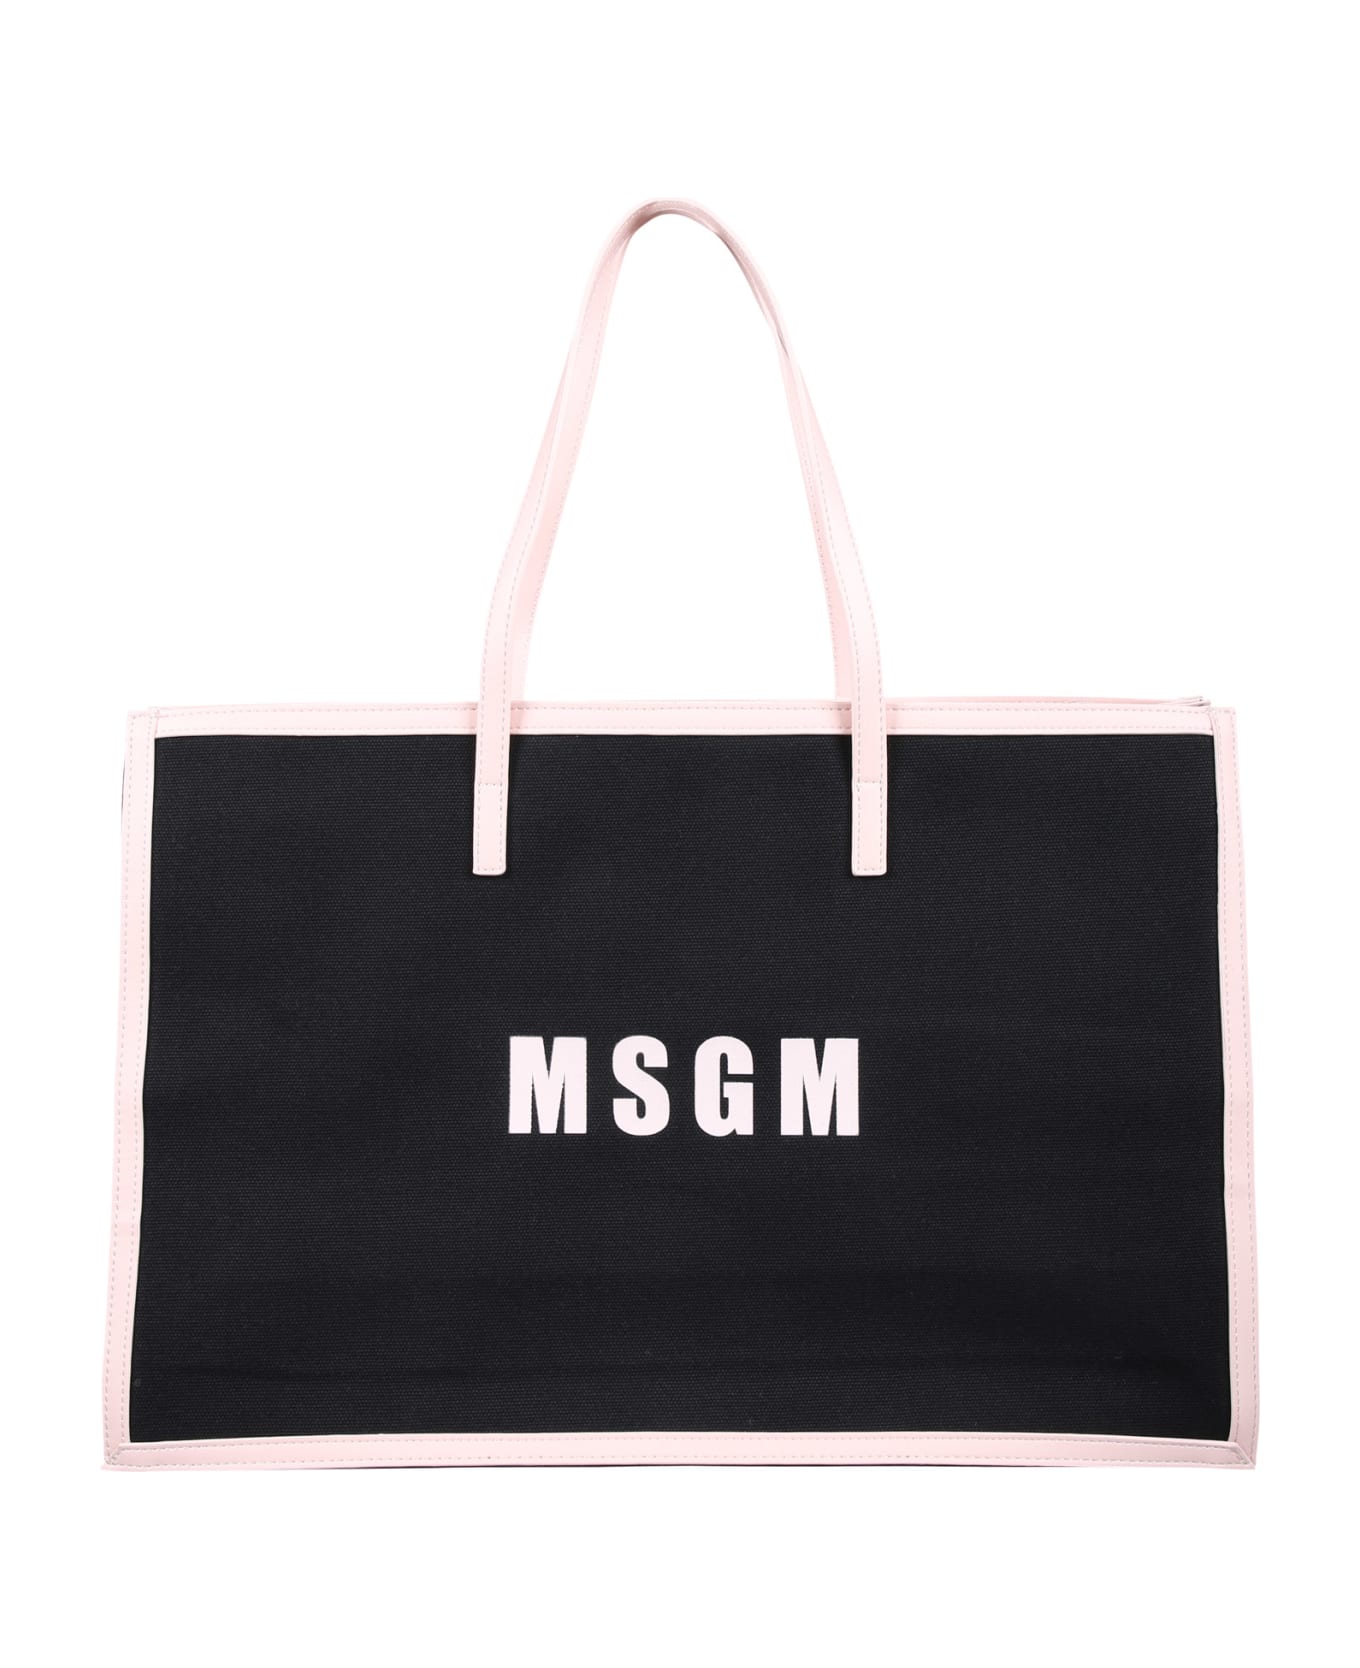 MSGM Black Bag Die For Girl With Logo - Black